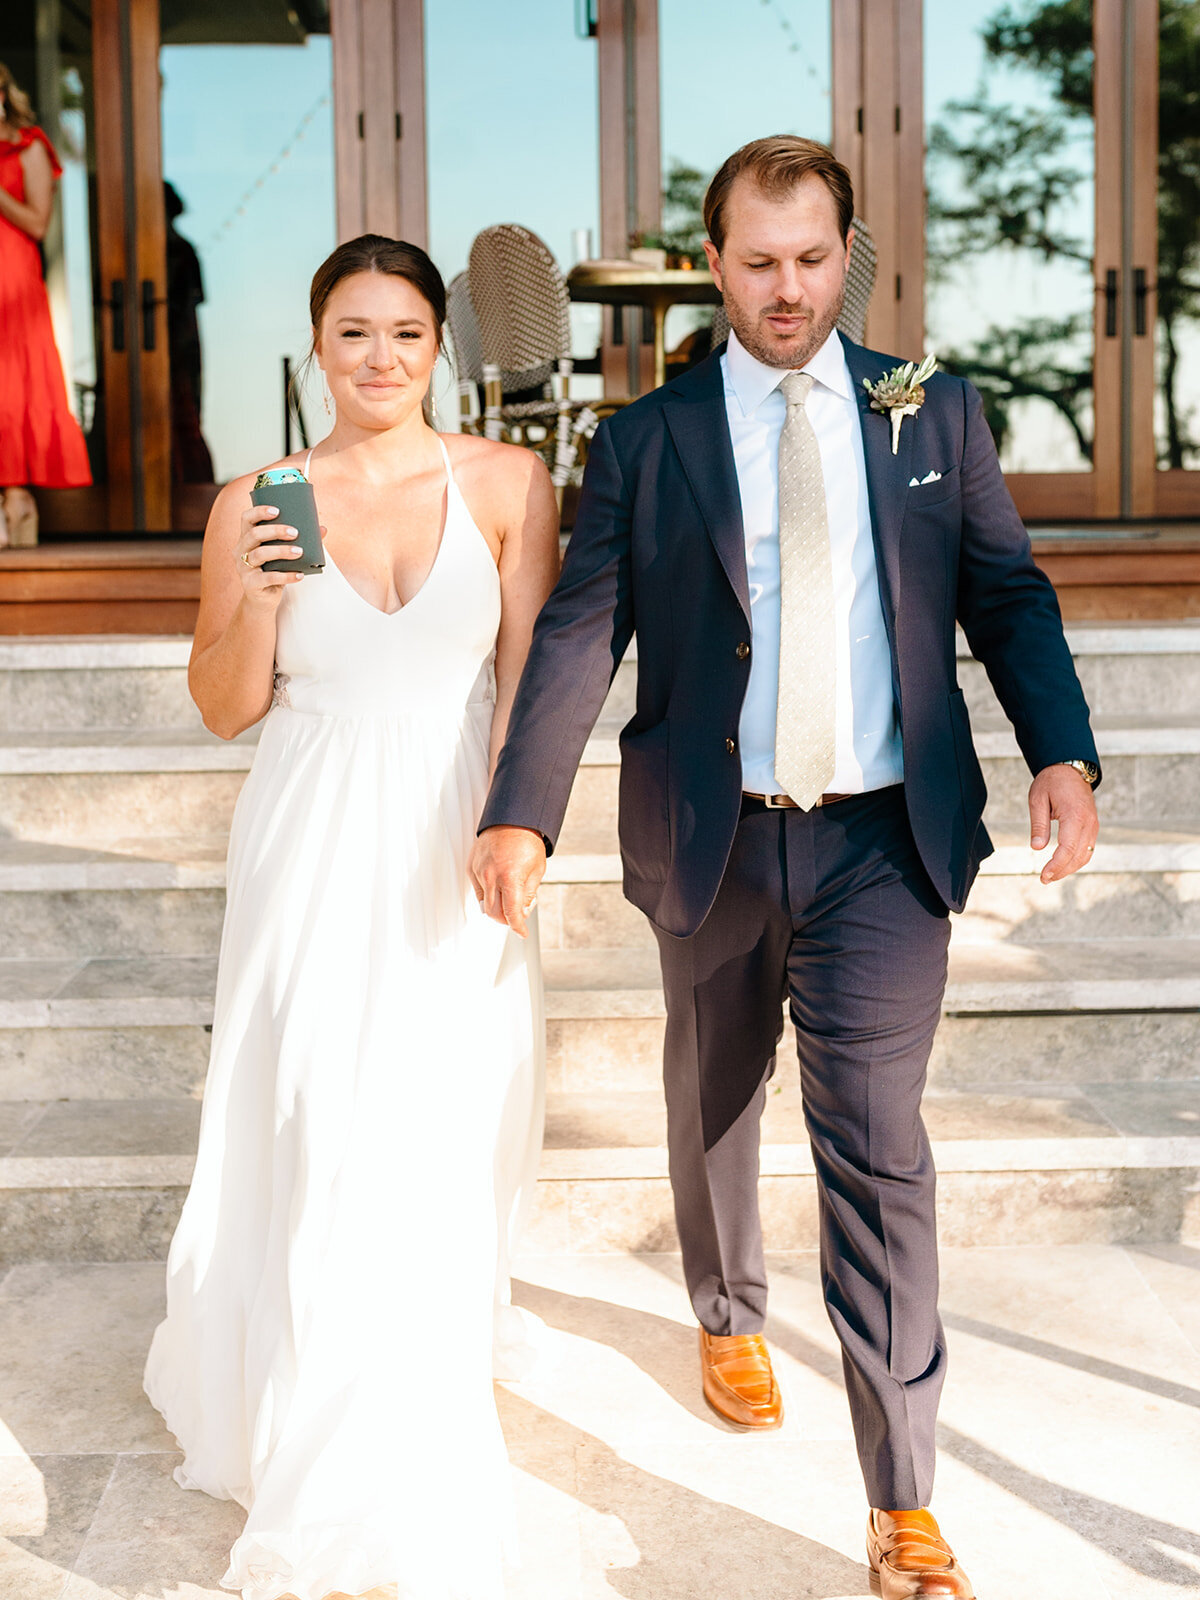 Hilton Head Island Wedding  | Sea Pines Wedding  | Trish Beck Events | Southeast Wedding Planner |  Josh Morehouse Photography  |  Cocktail Hour Reception  Bride and Groom